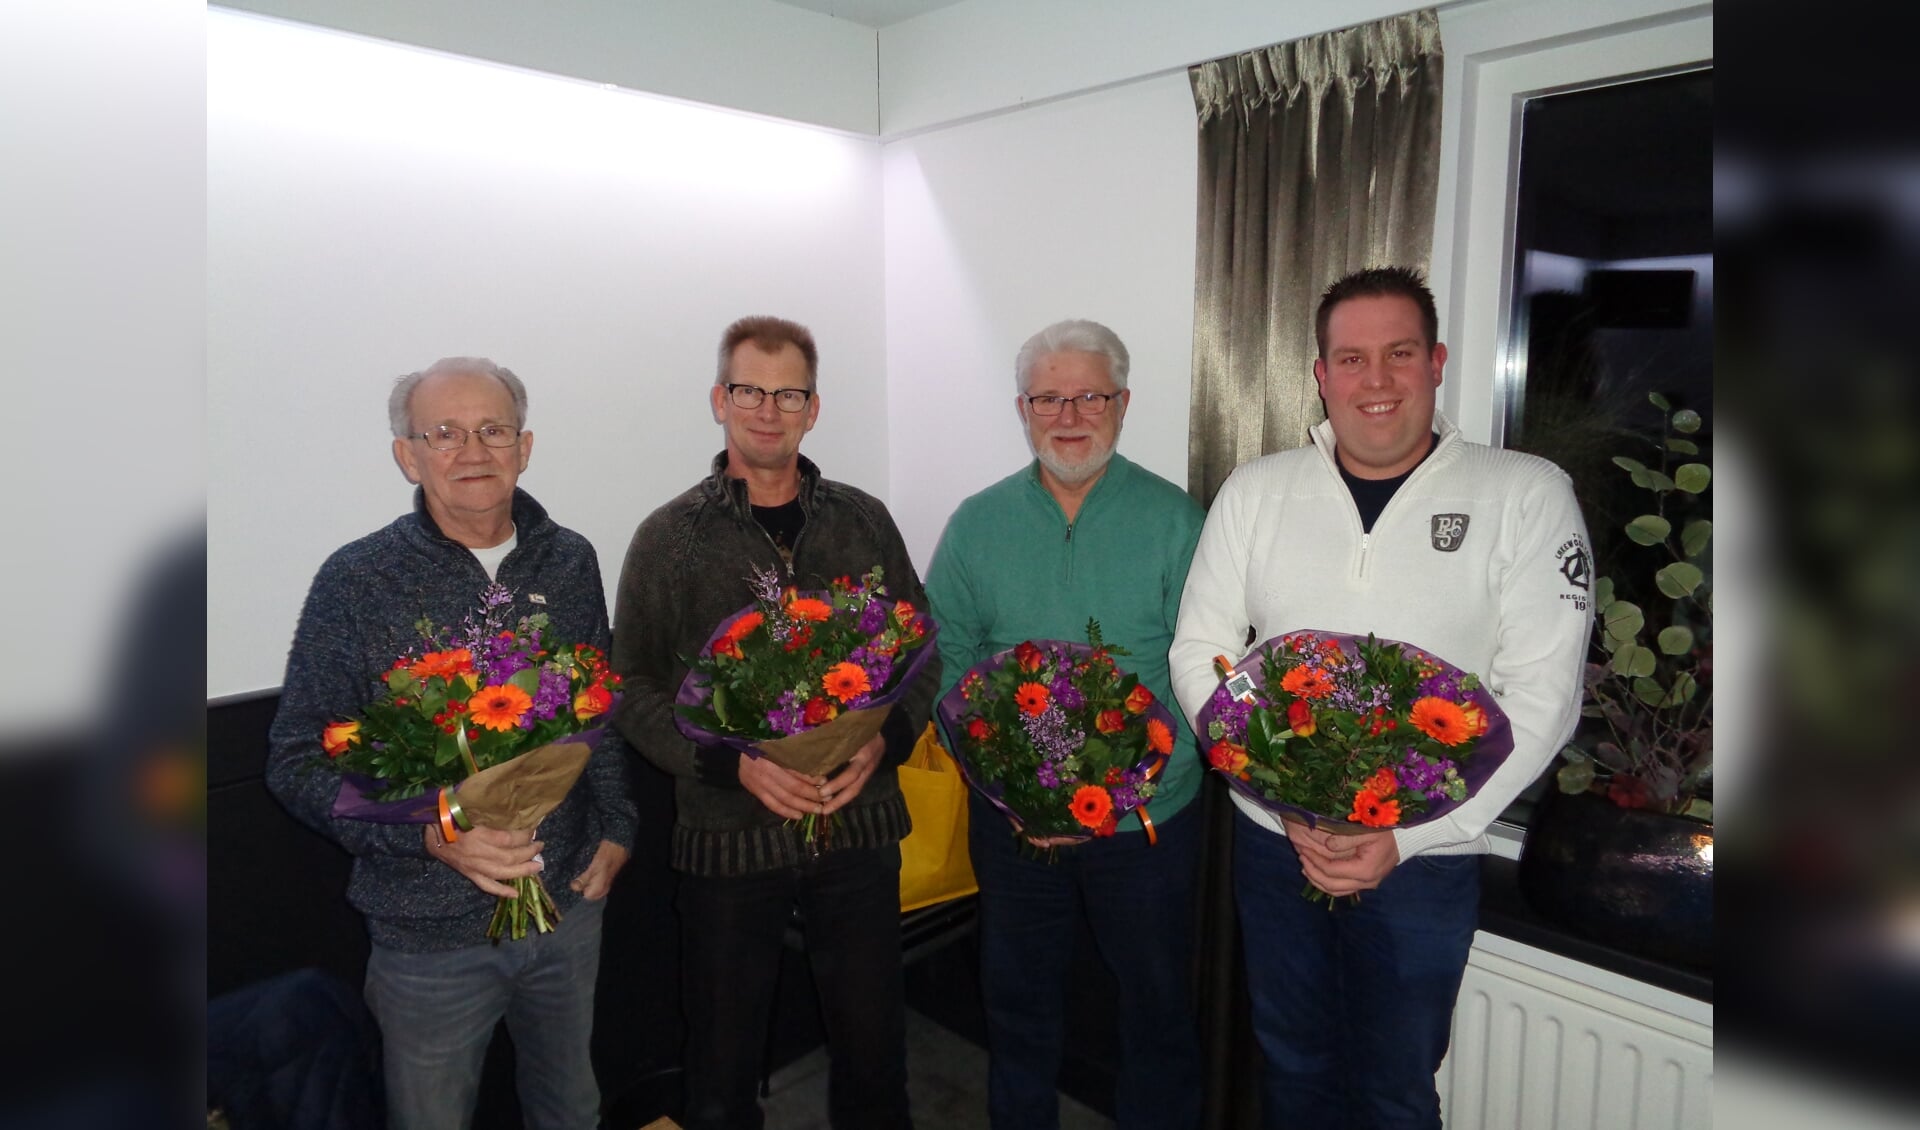 V.l.n.r. Peter den Braber, Ad Reuvers, Alois van Mingeroet, Patrick den Hollander. FOTO I. DE JONG